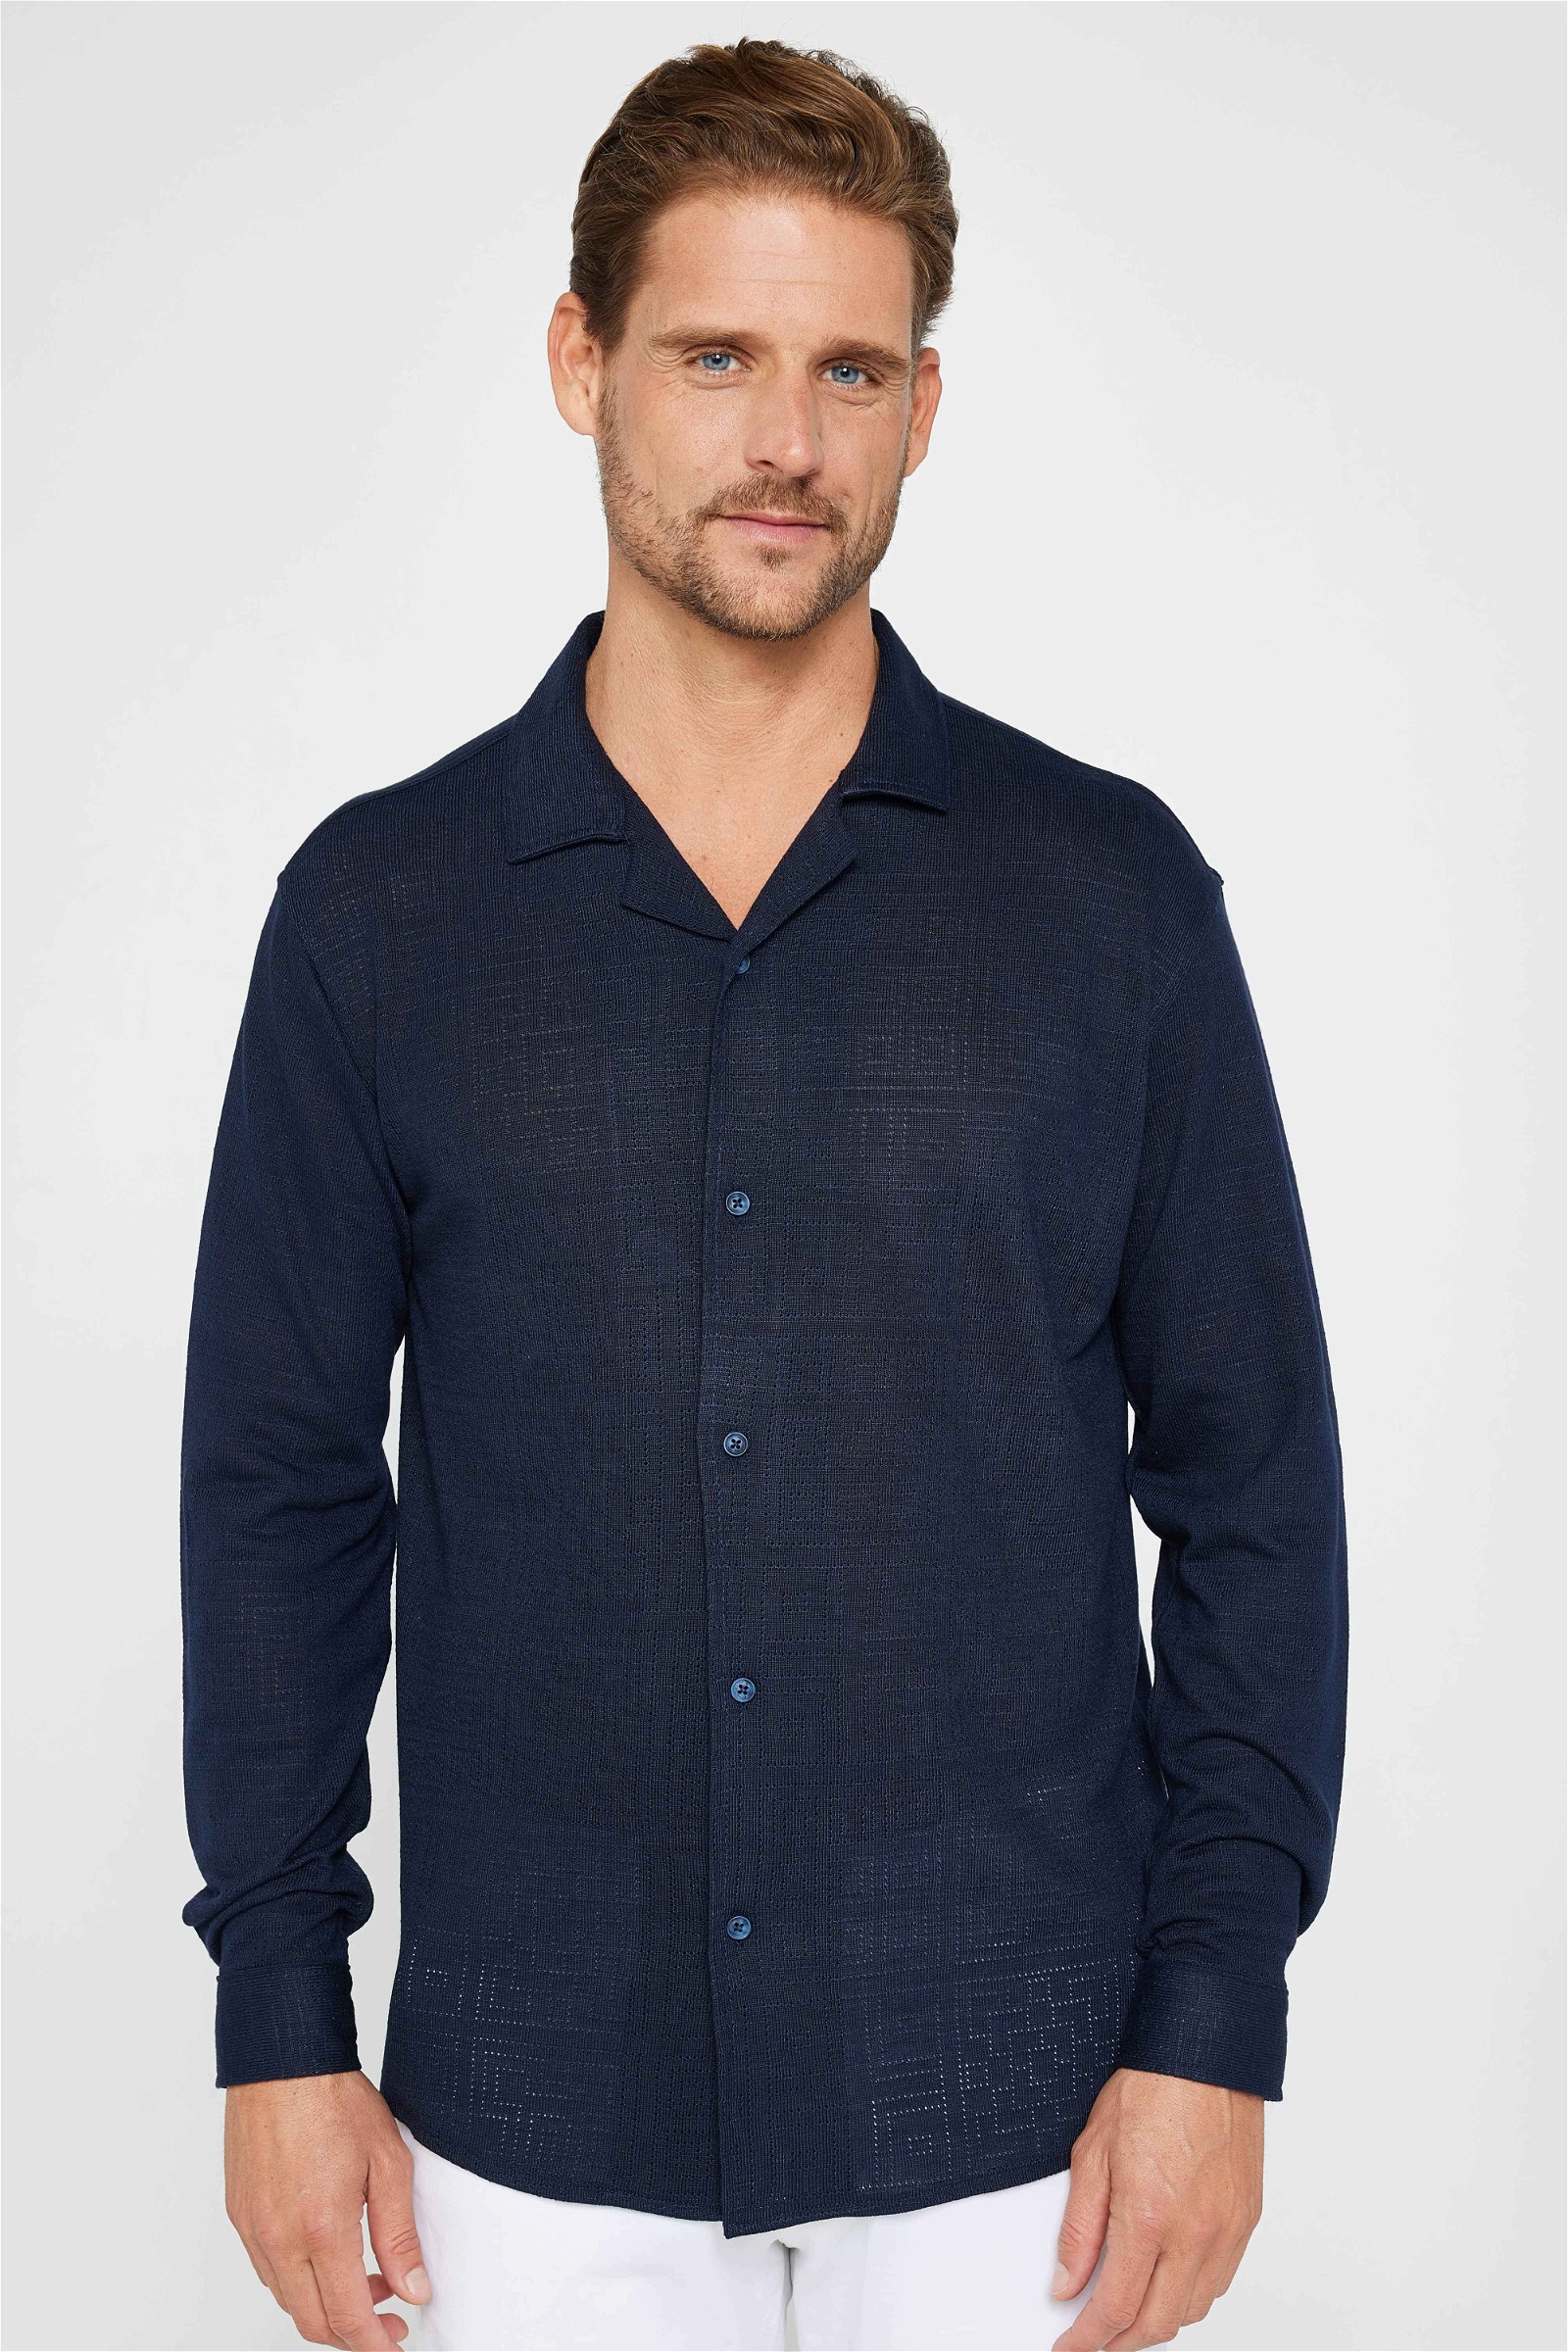 Knitted Navy Blue Shirt